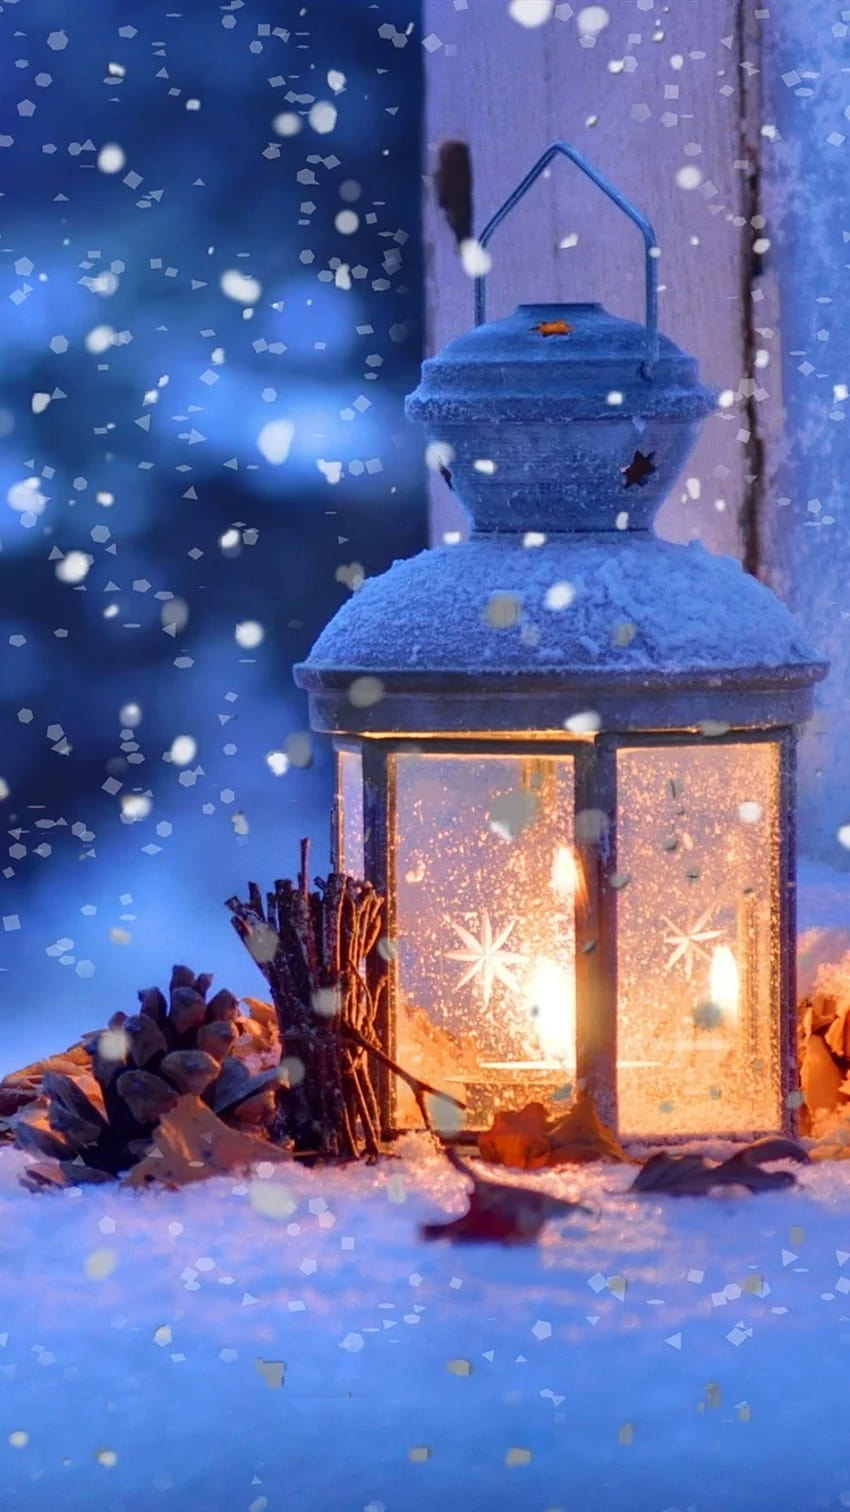 Iphone クリスマス 雪 冬, 光, 雪の結晶, スノーフレーク クリスマス HD電話の壁紙